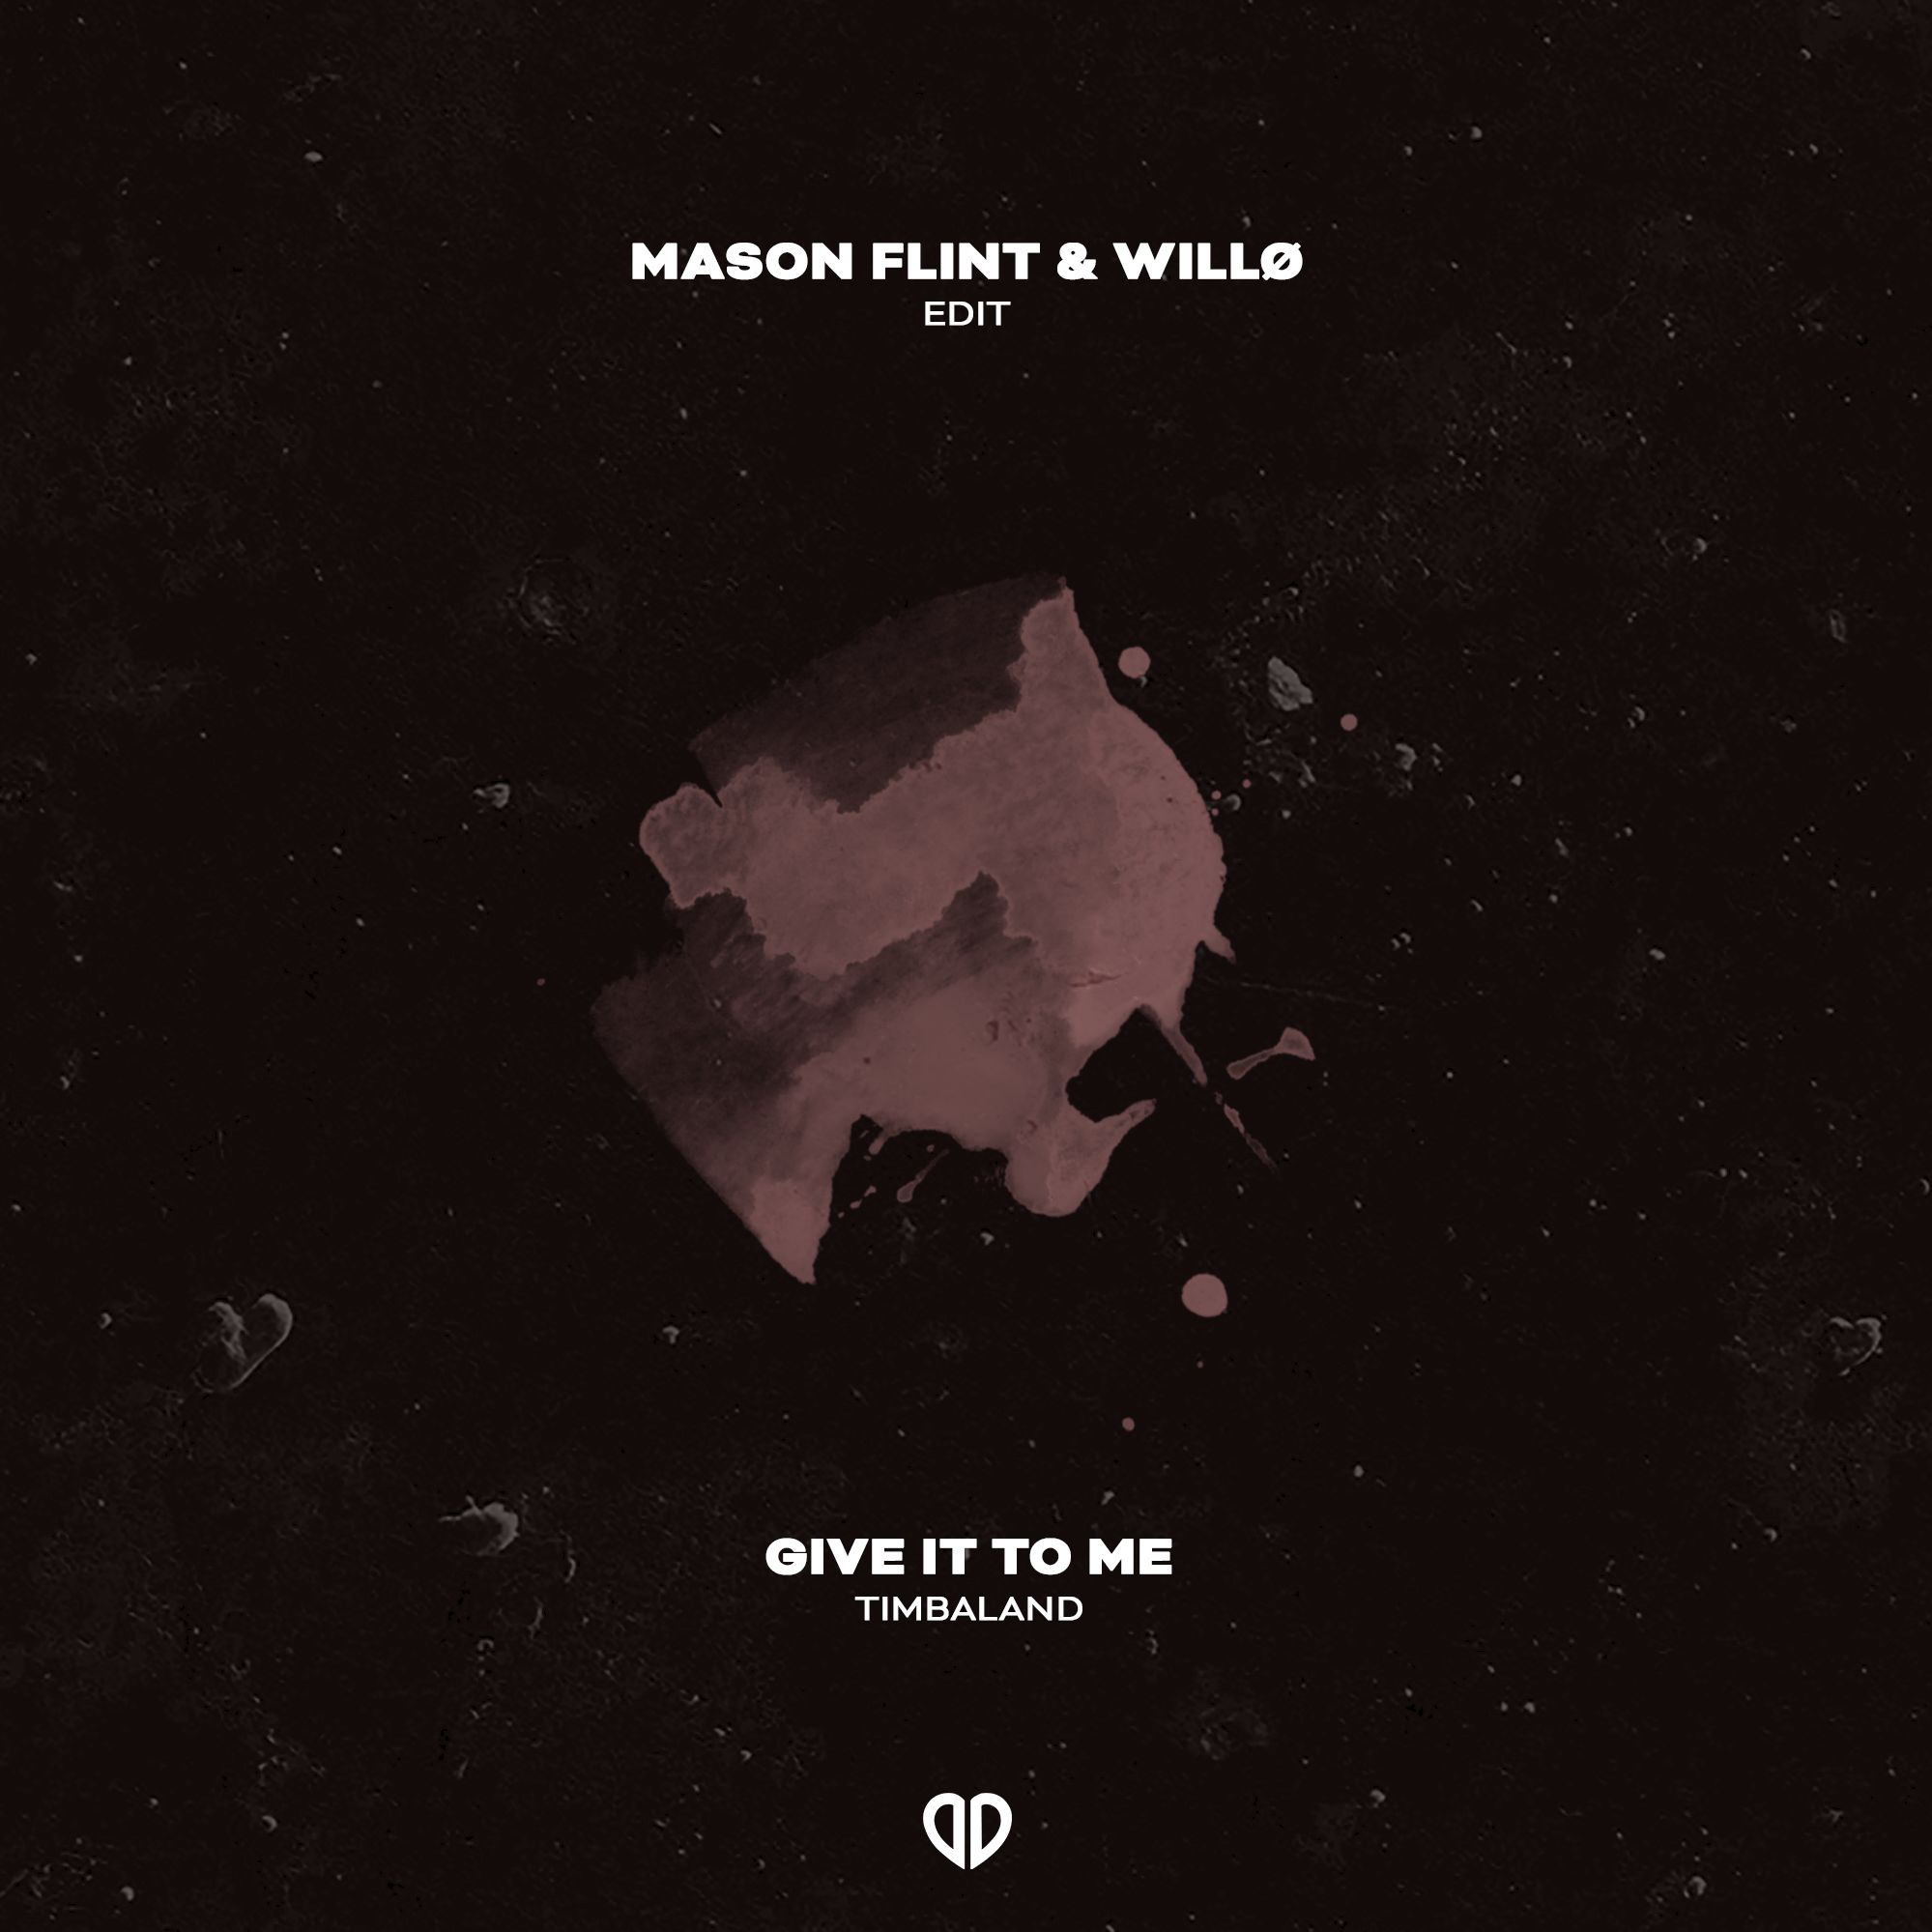 डाउनलोड करा Timbaland - Give It To Me (Mason Flint & Willo Edit) [DropUnited Exclusive]